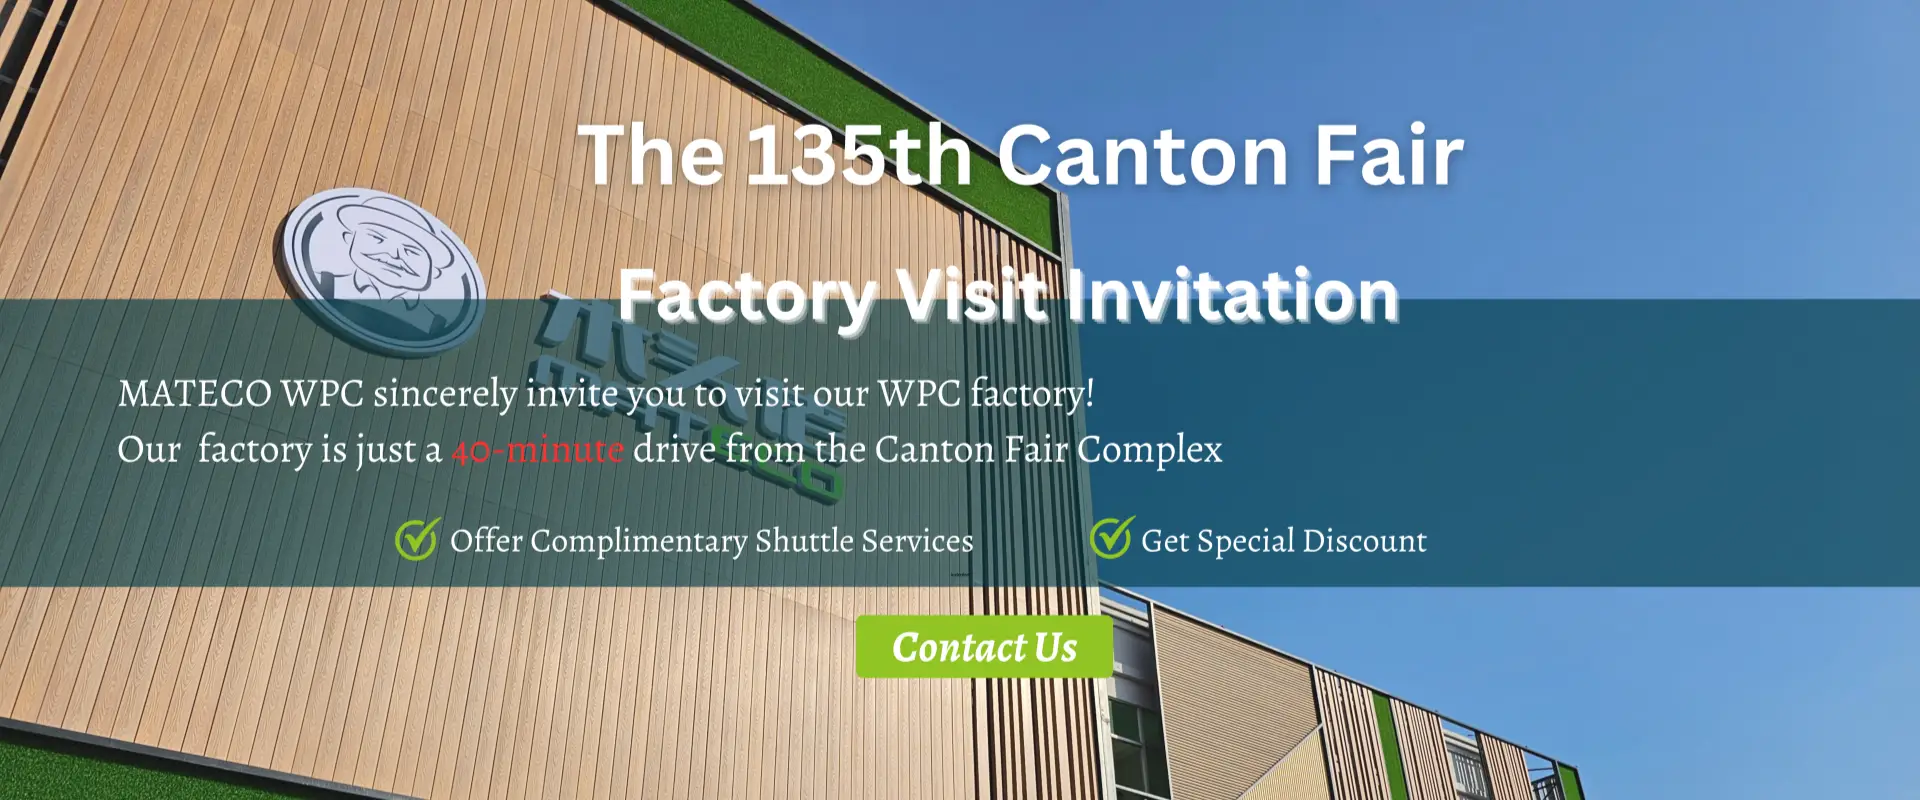 The 135th Canton Fair WPC Factory Visit Invitation